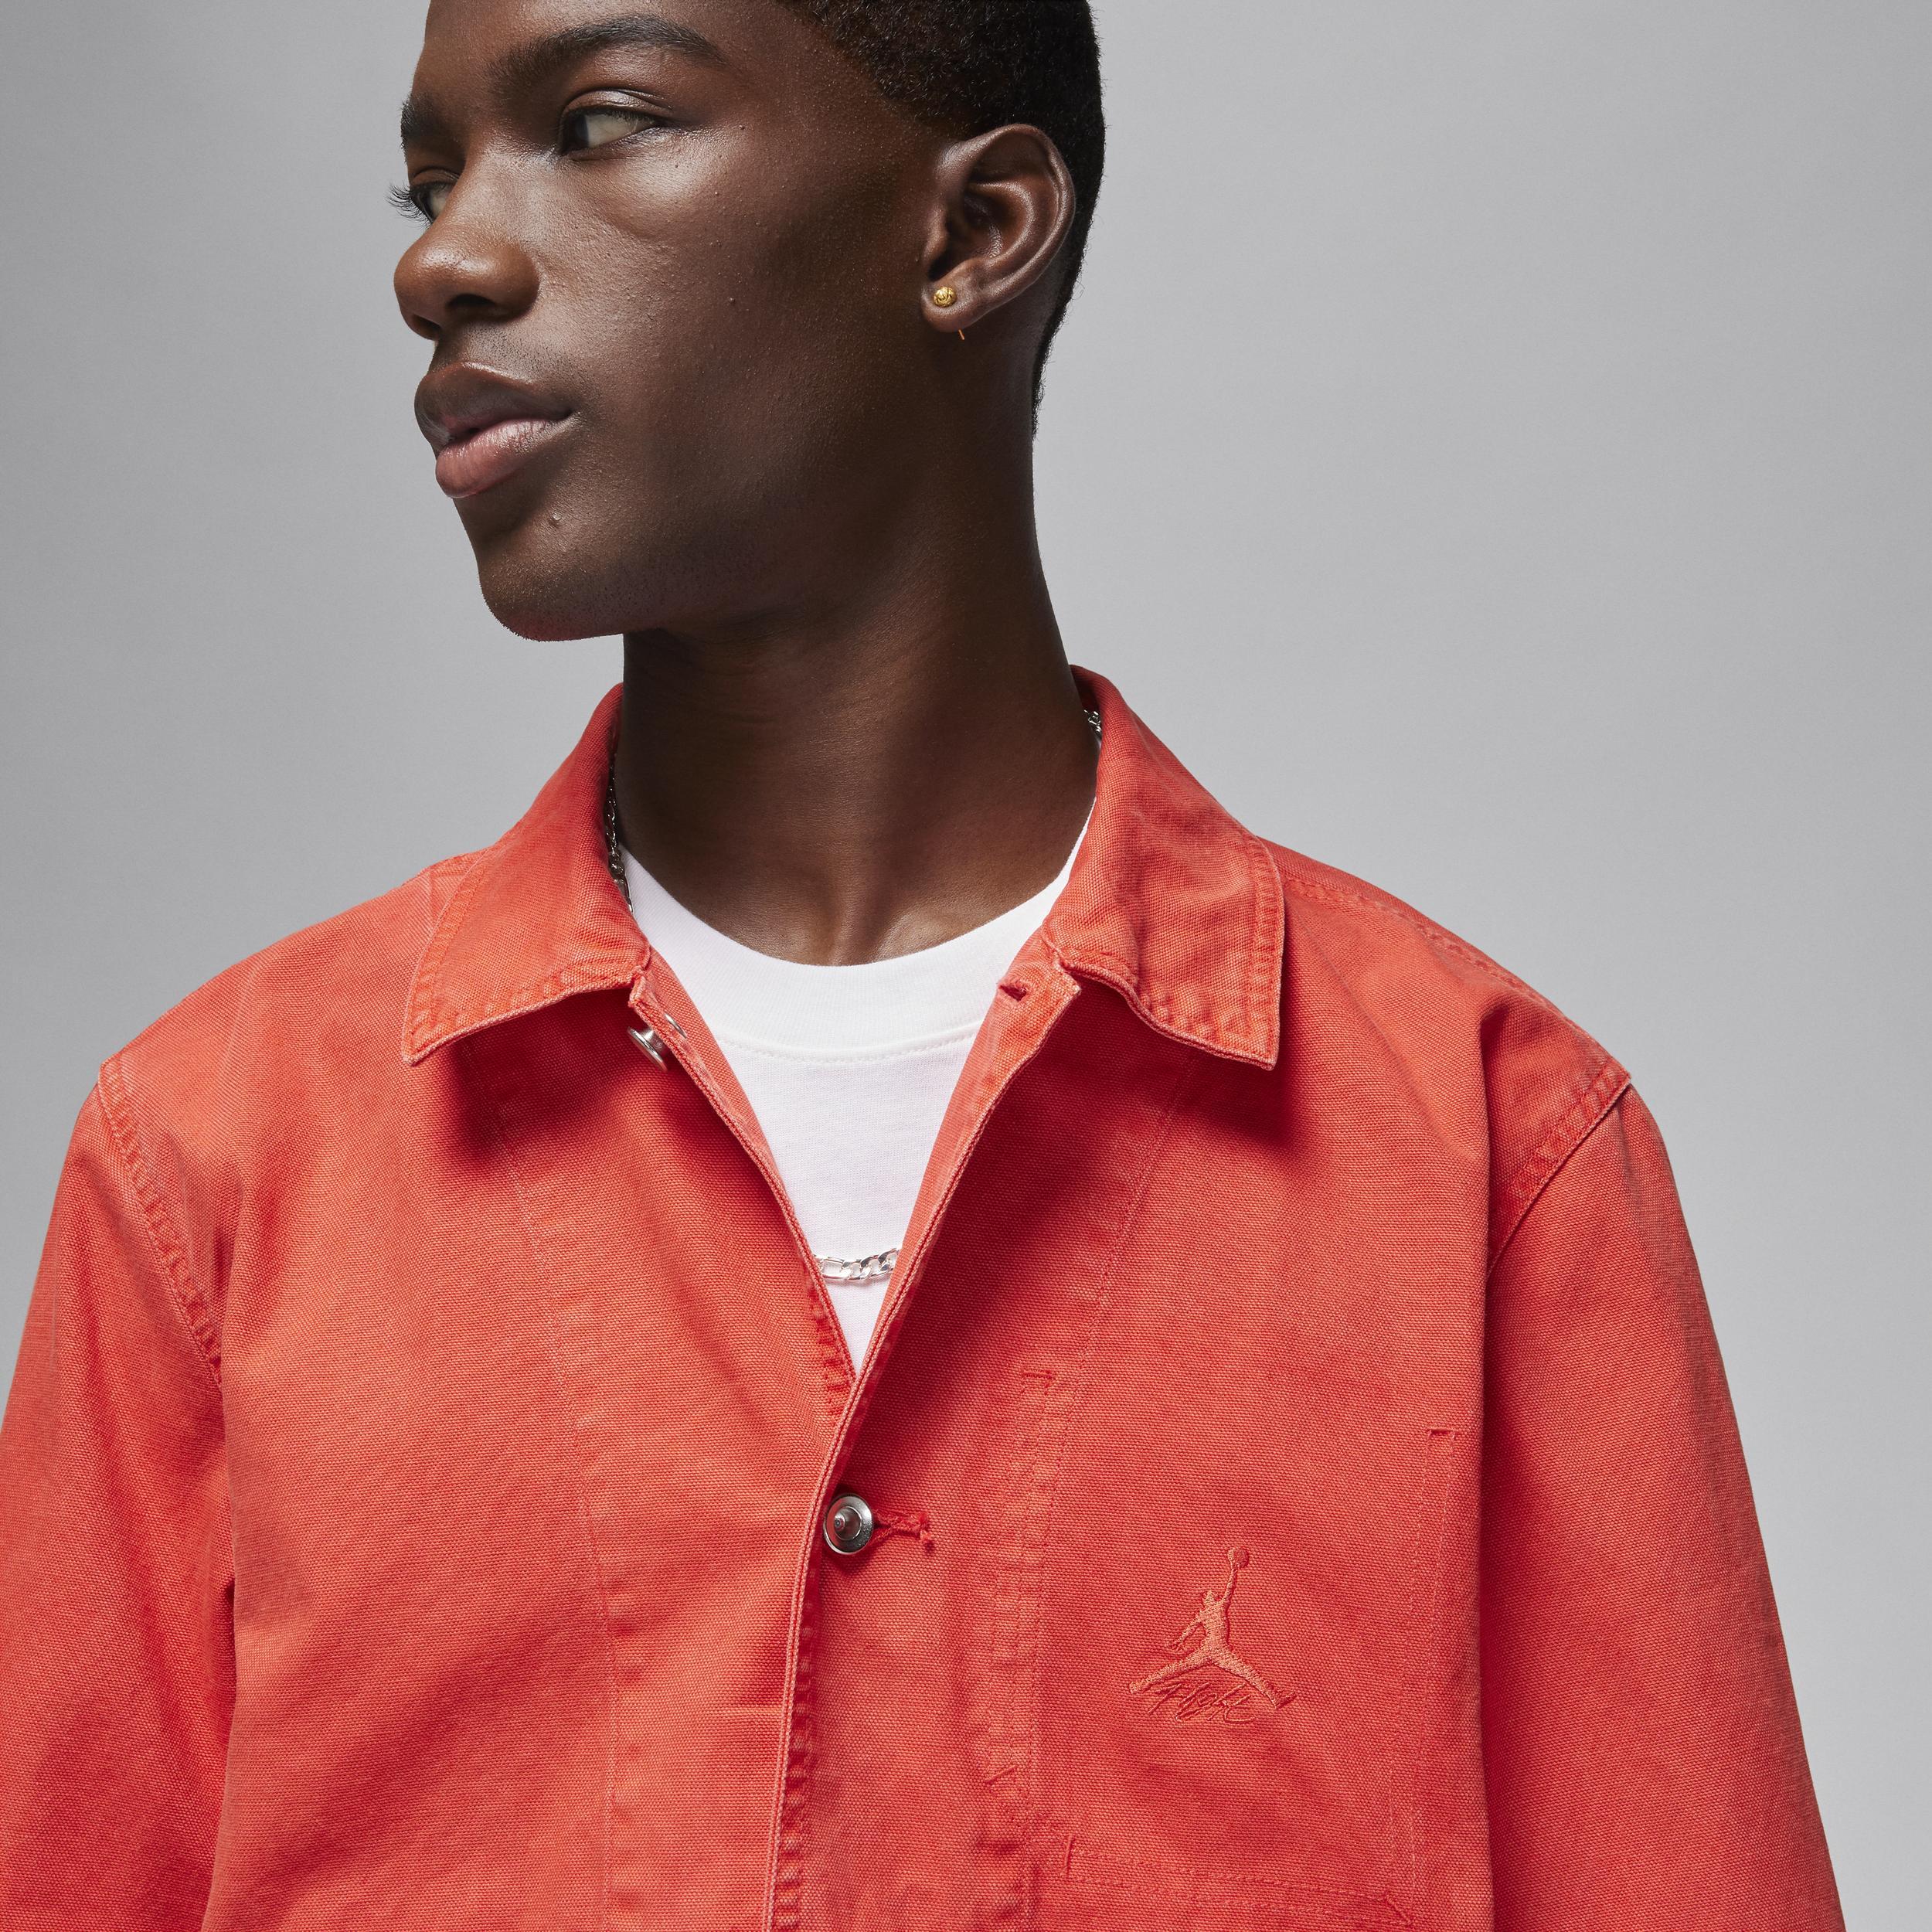 Men's Jordan Essentials Chicago Jacket Product Image